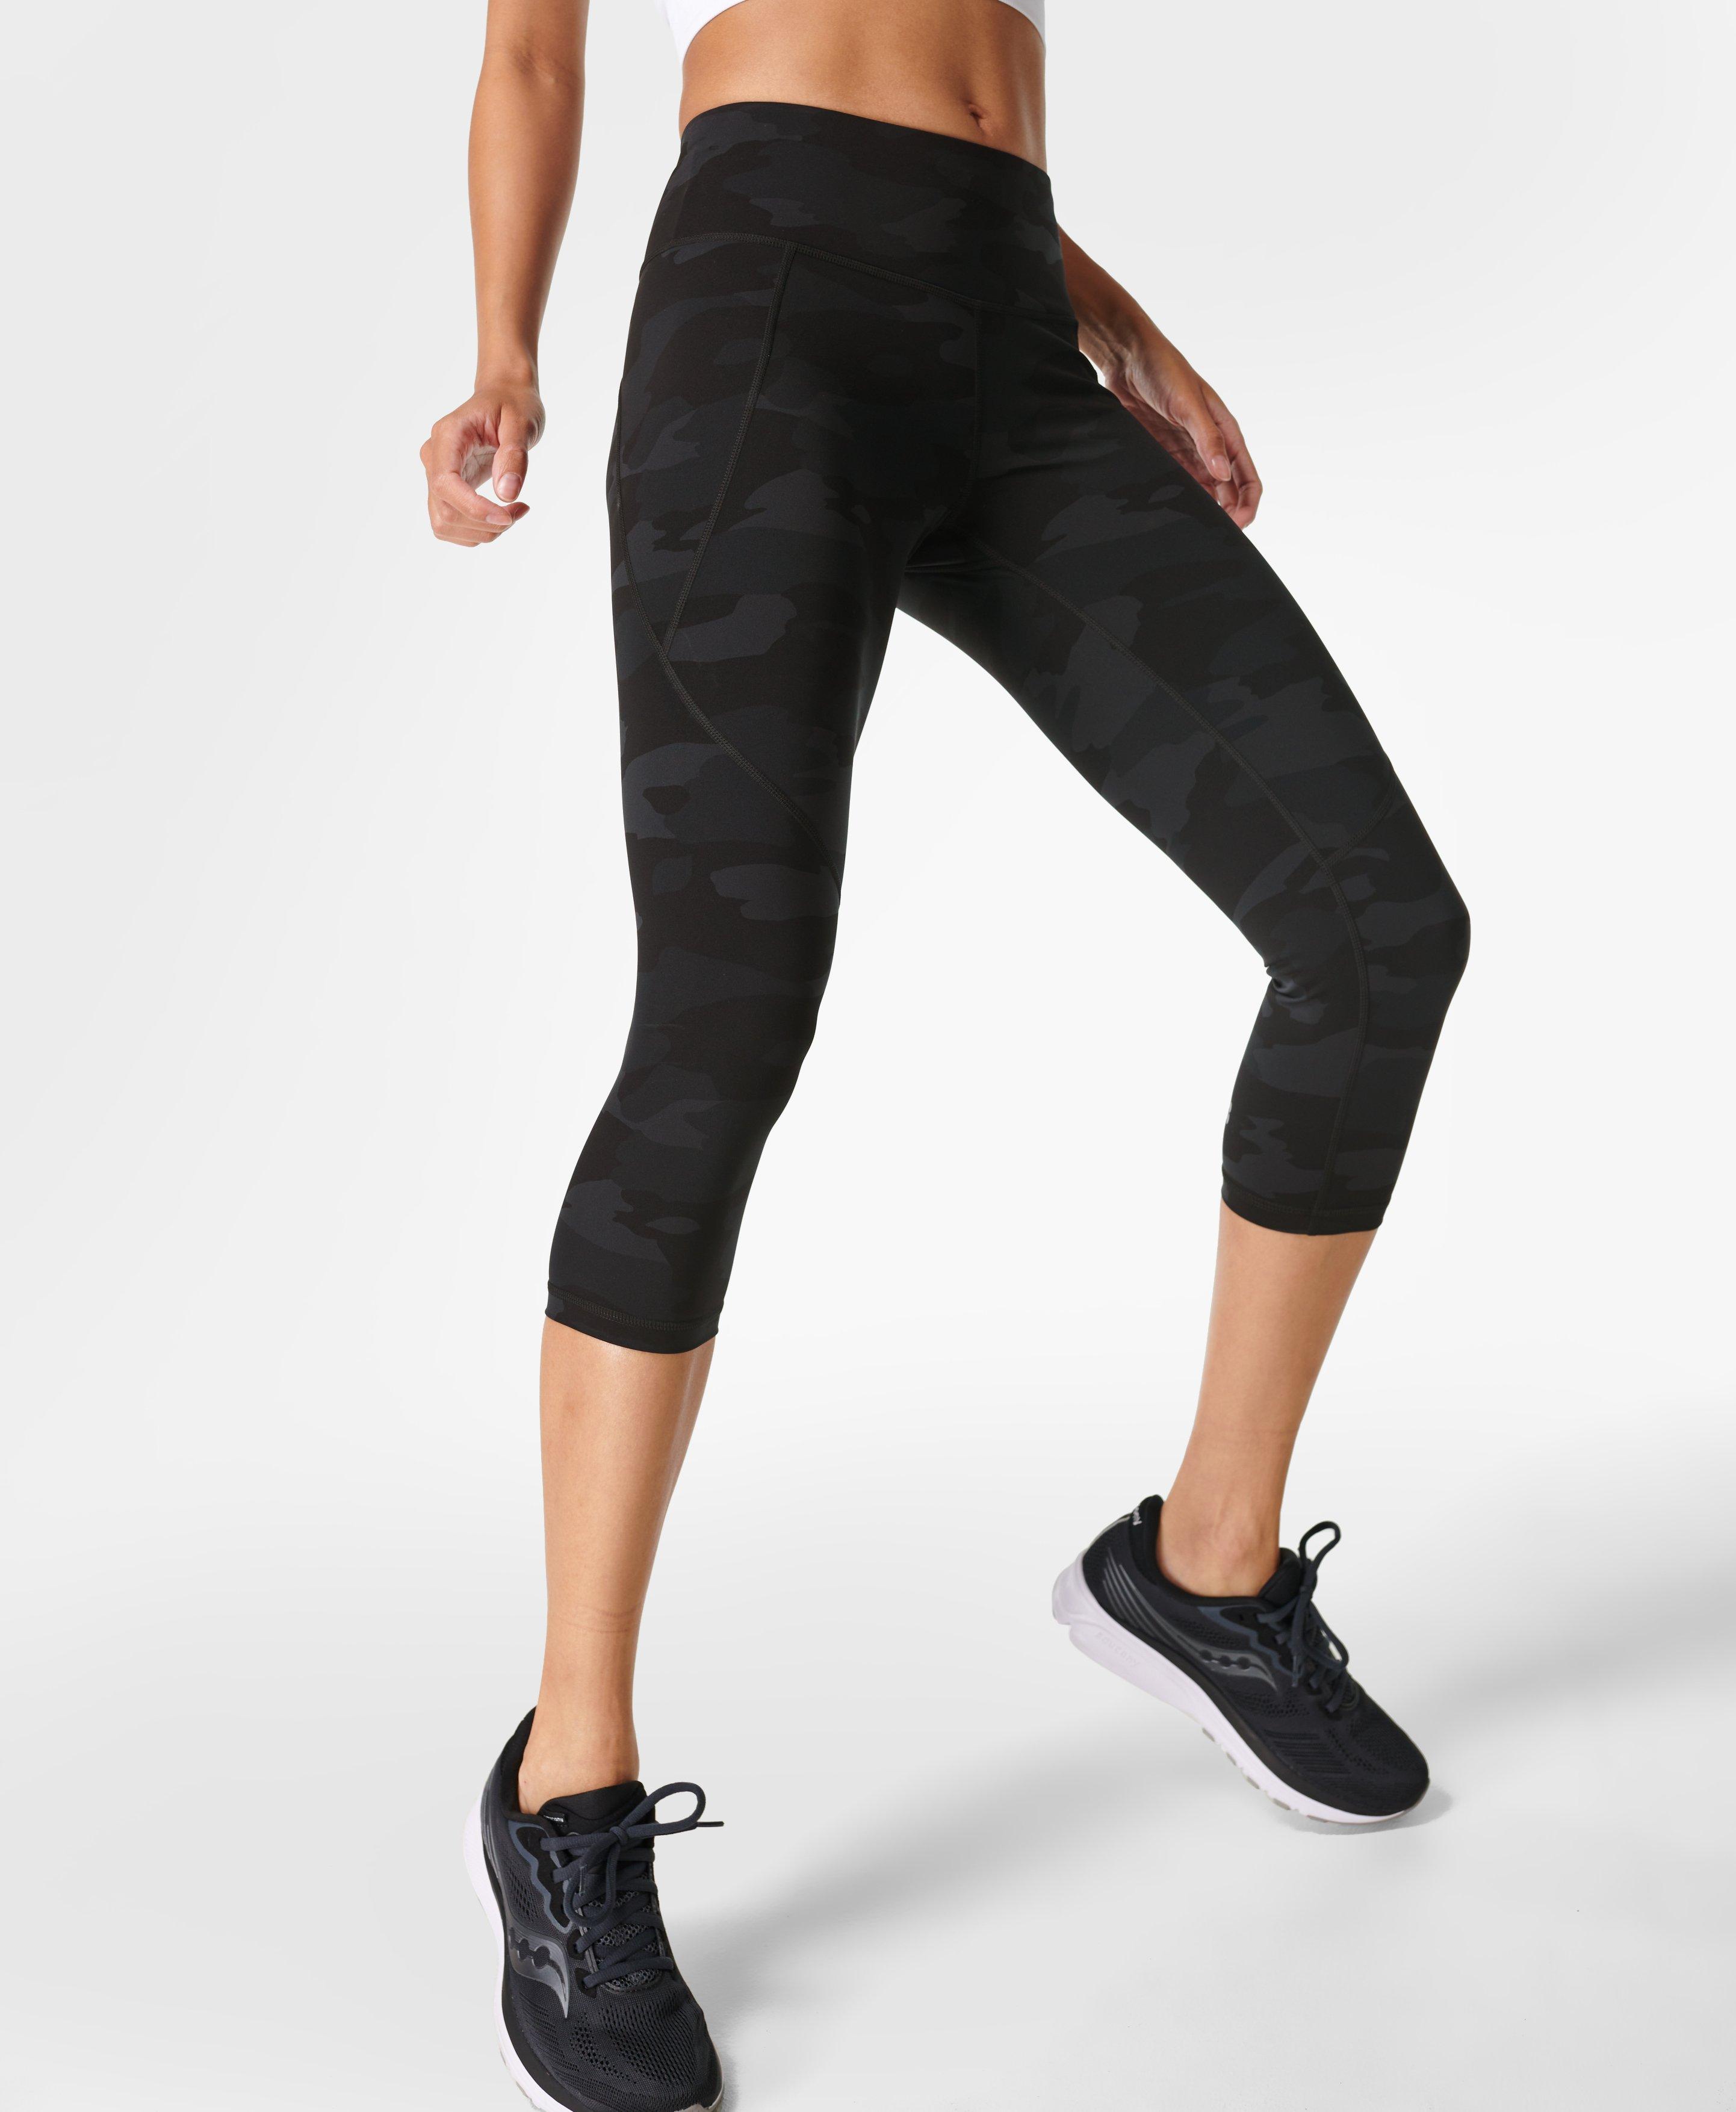 Power Cropped Workout Leggings - Ultra Black Camo Print, Women's Leggings